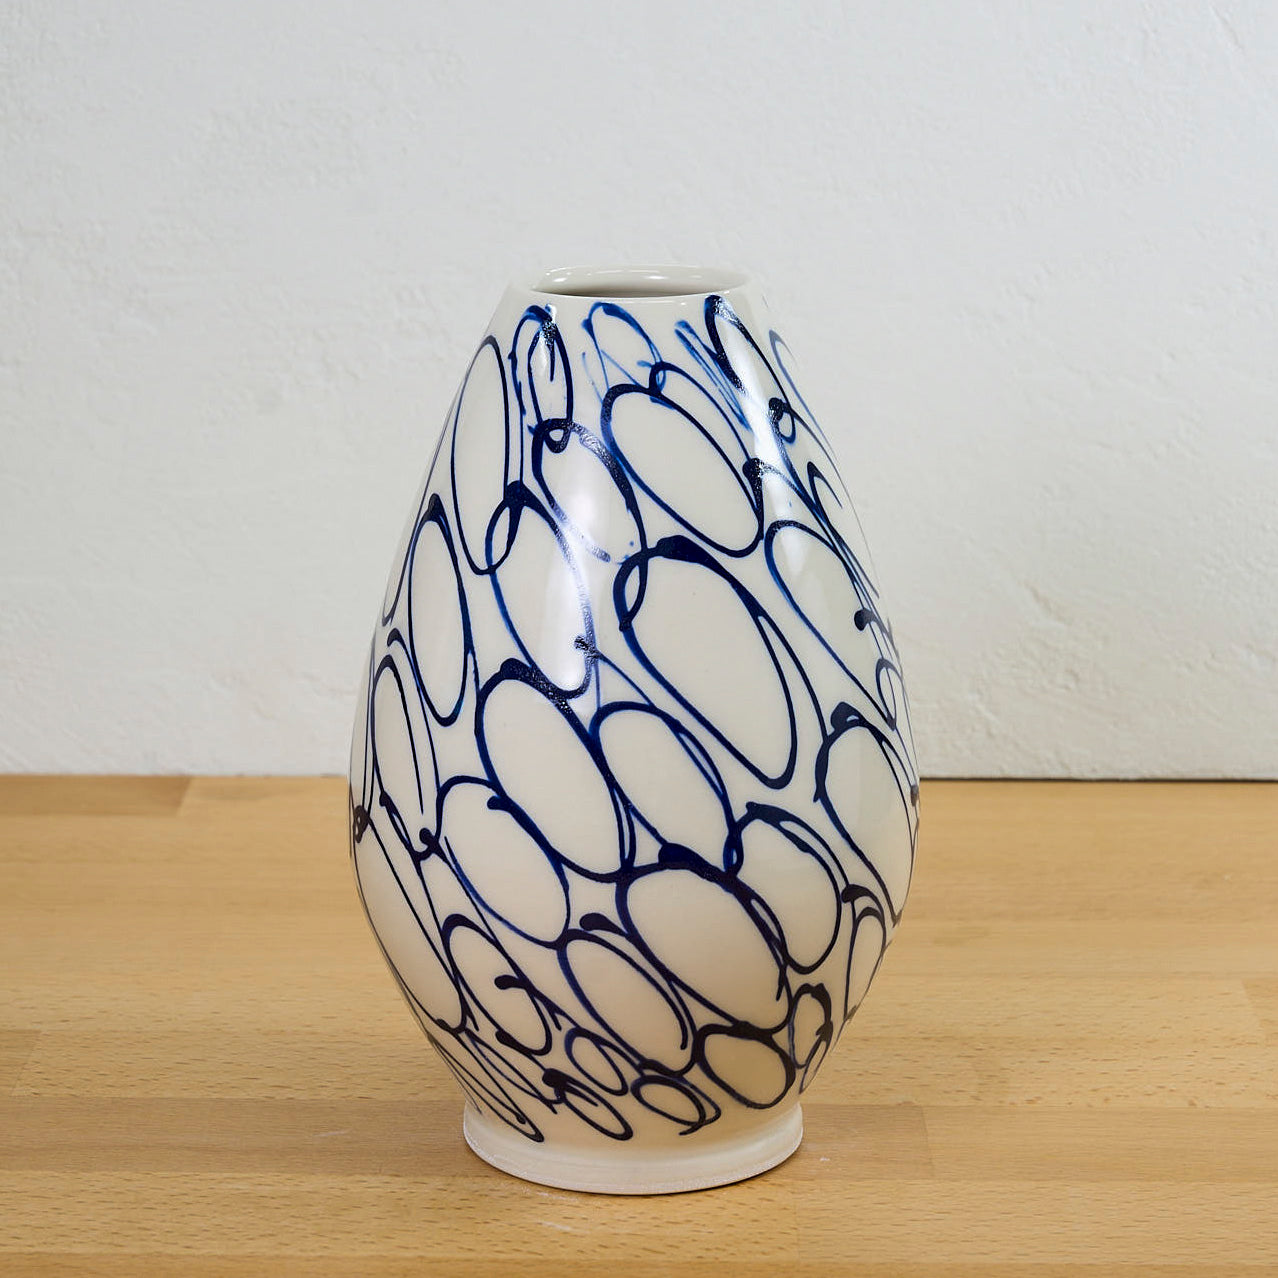 Ltd. Edition Vase- Circles